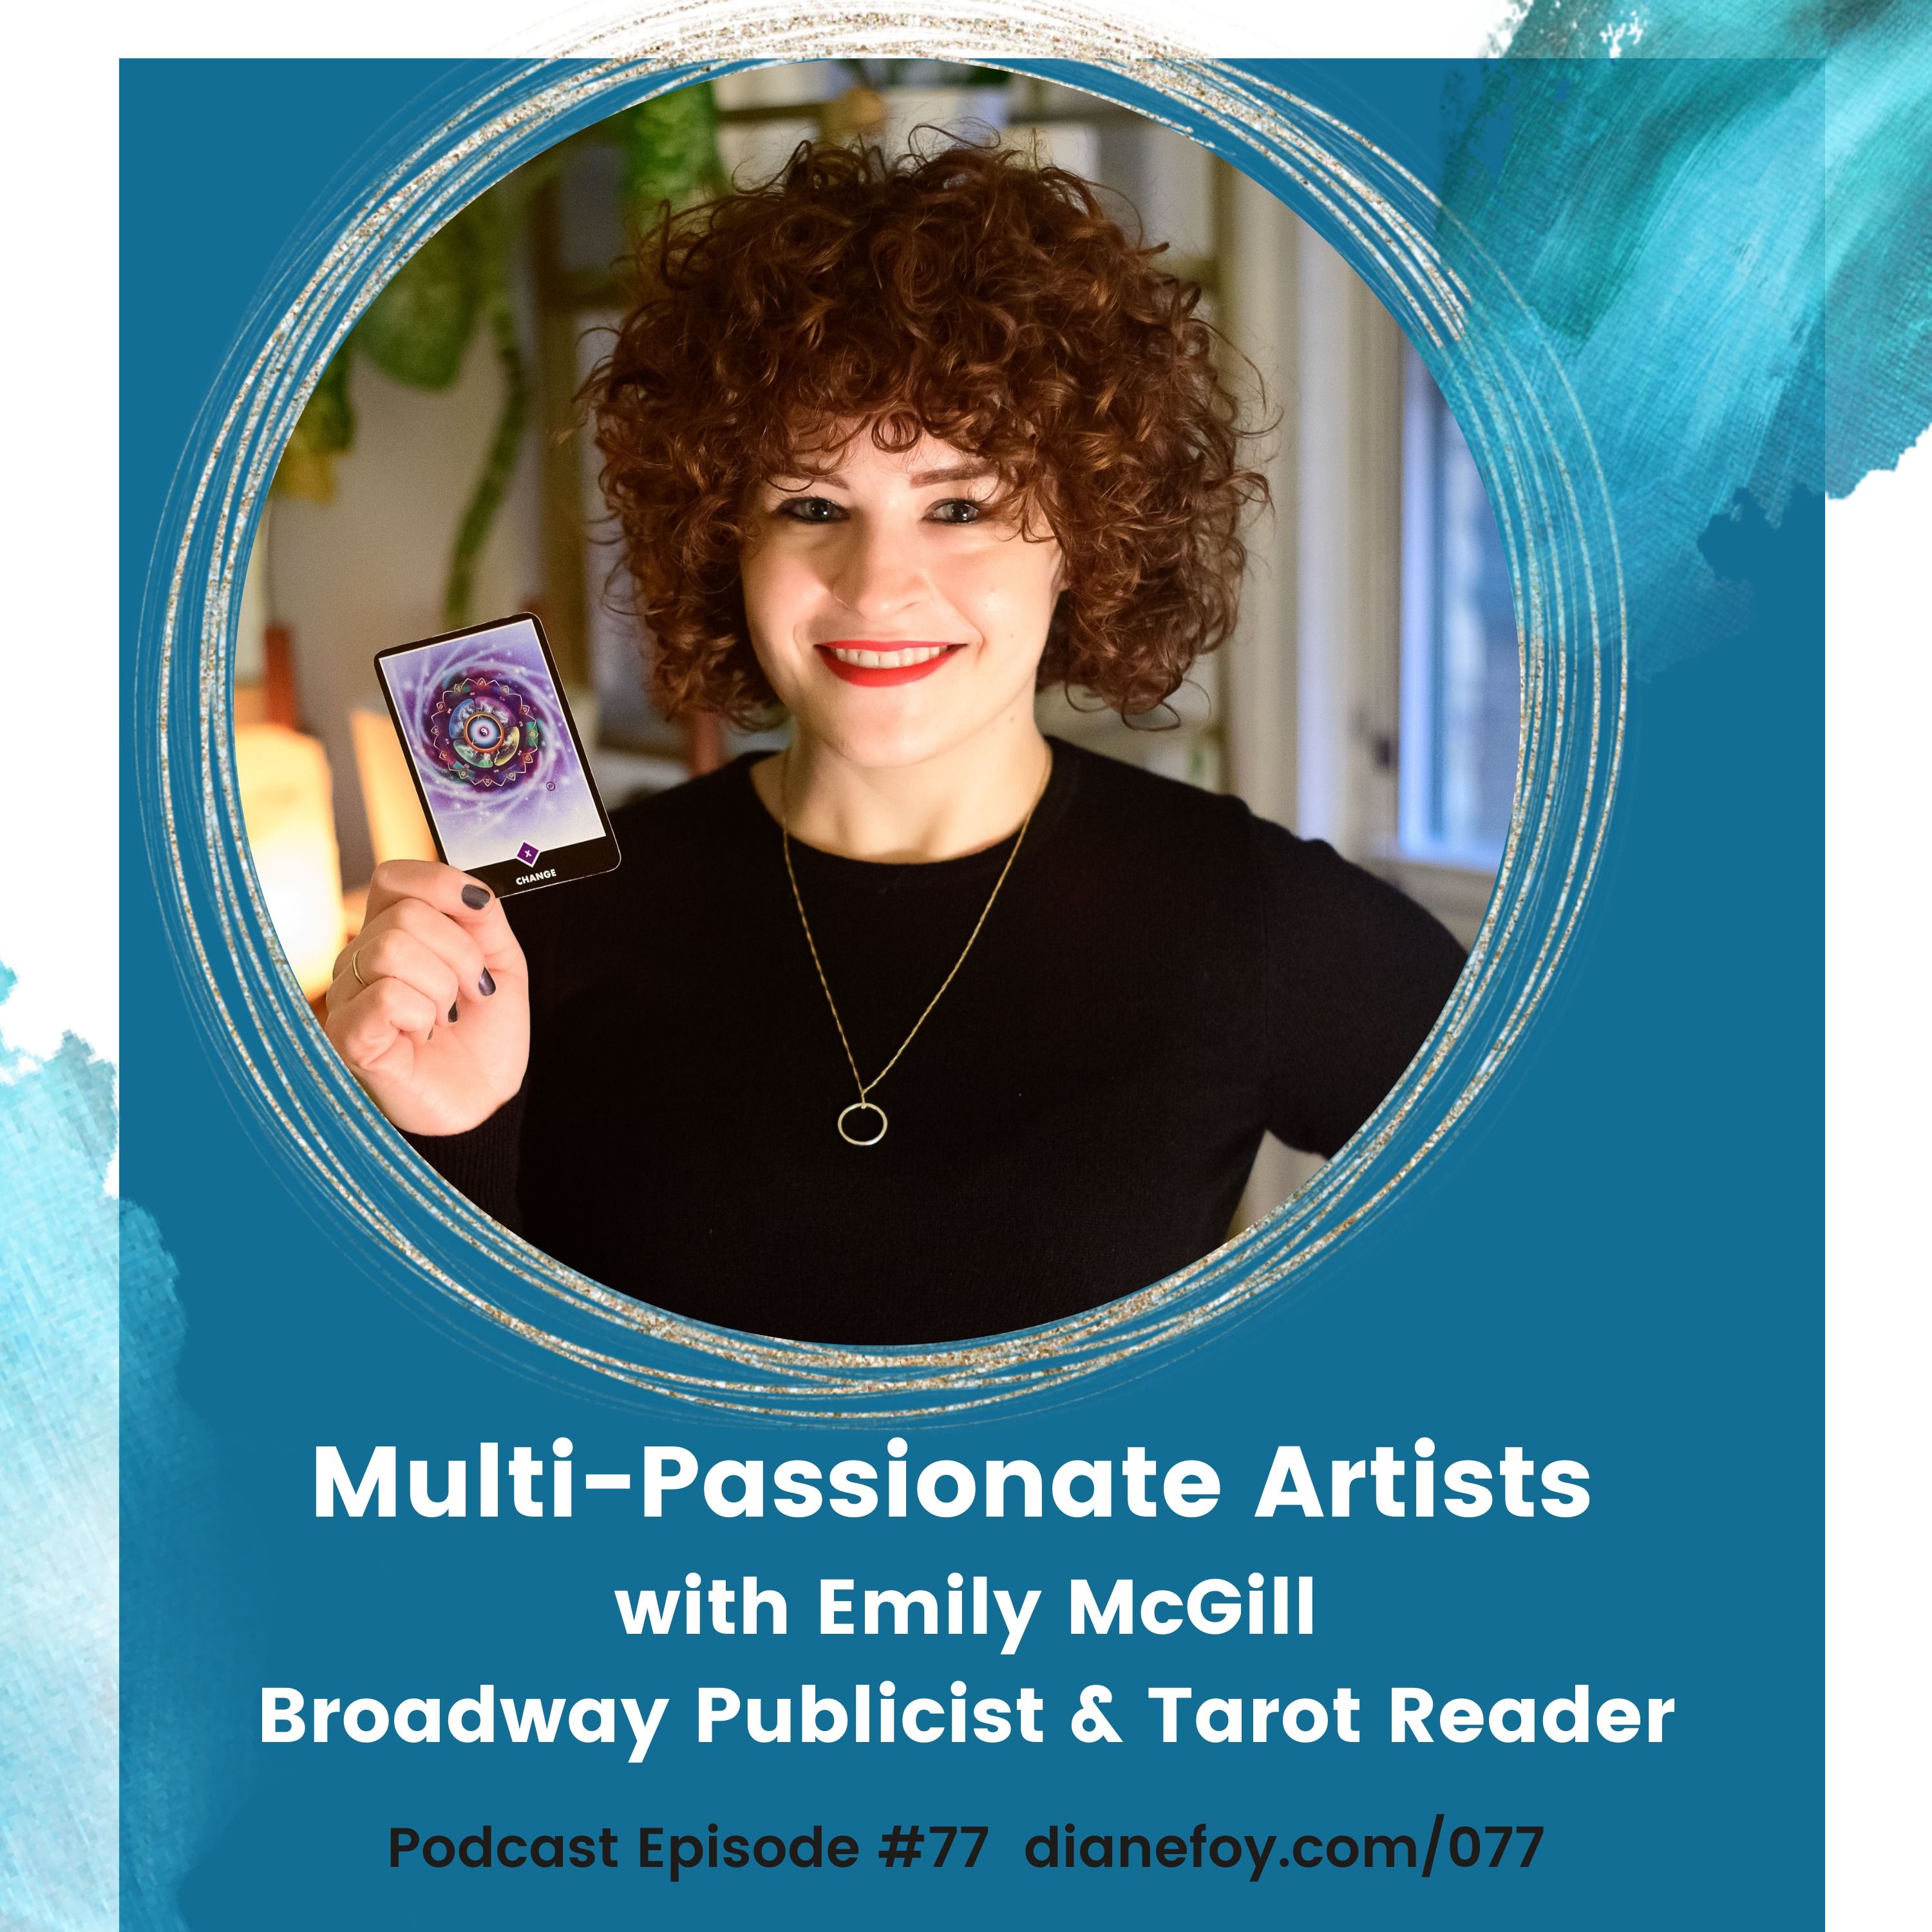 Broadway Publicist & Tarot Reader Emily McGill hero artwork